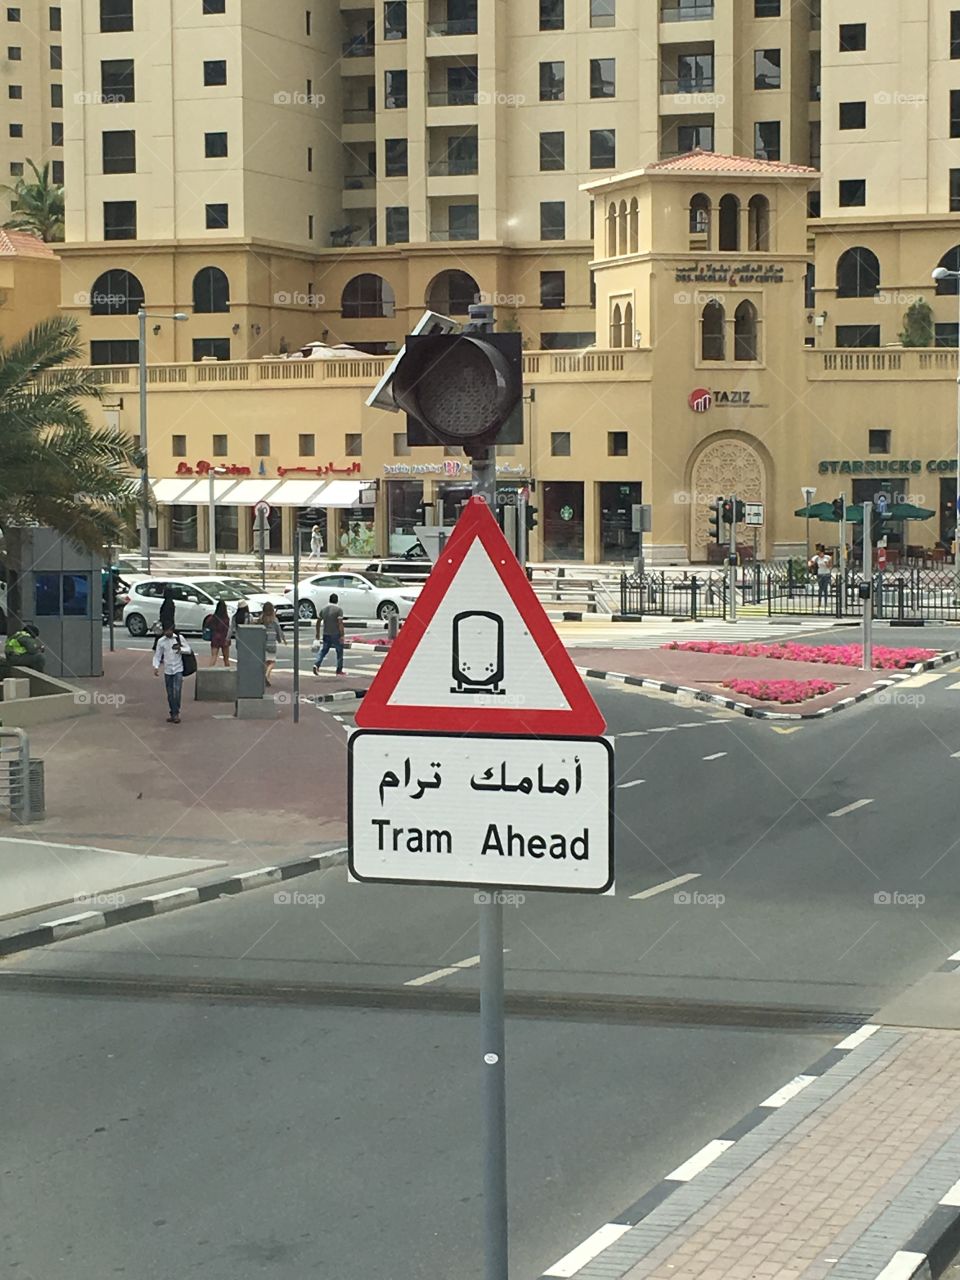 Tram ahead! (Dubai traffic sign)